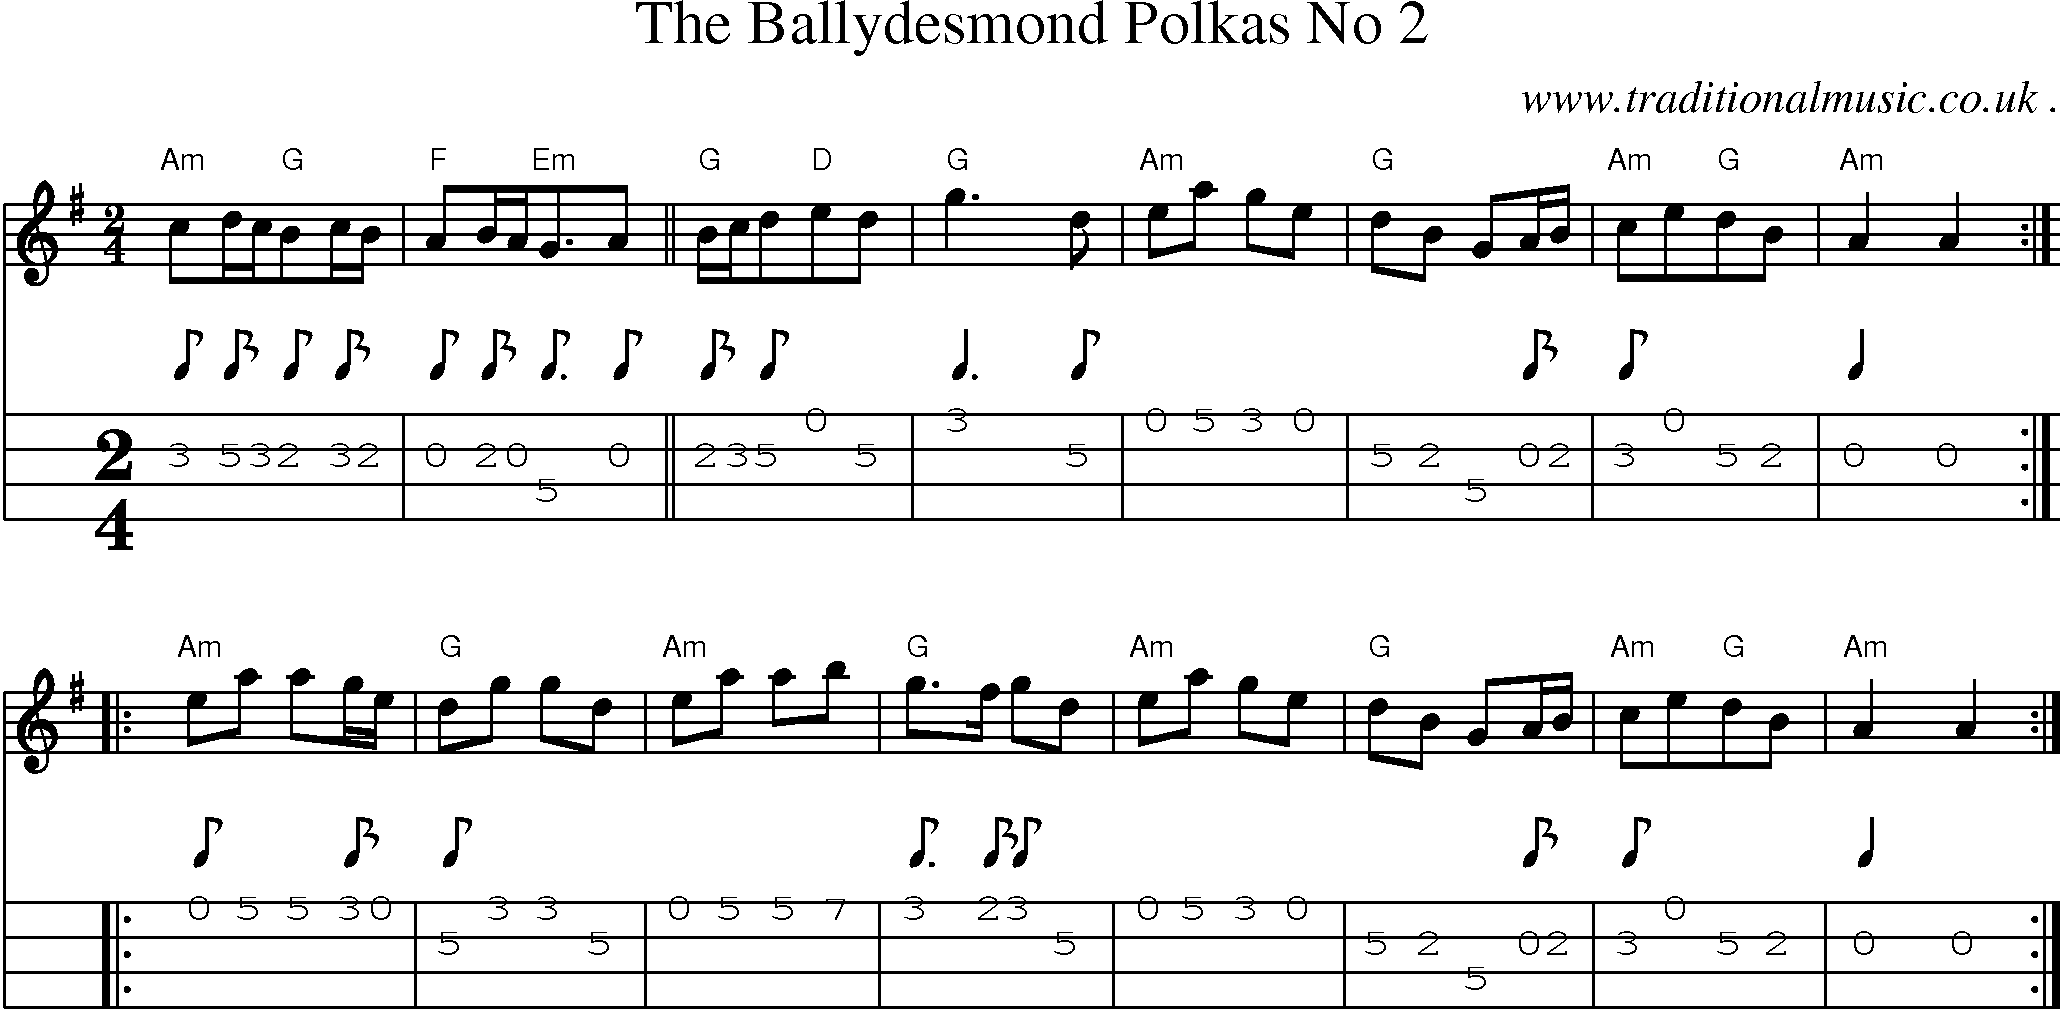 Sheet-Music and Mandolin Tabs for The Ballydesmond Polkas No 2